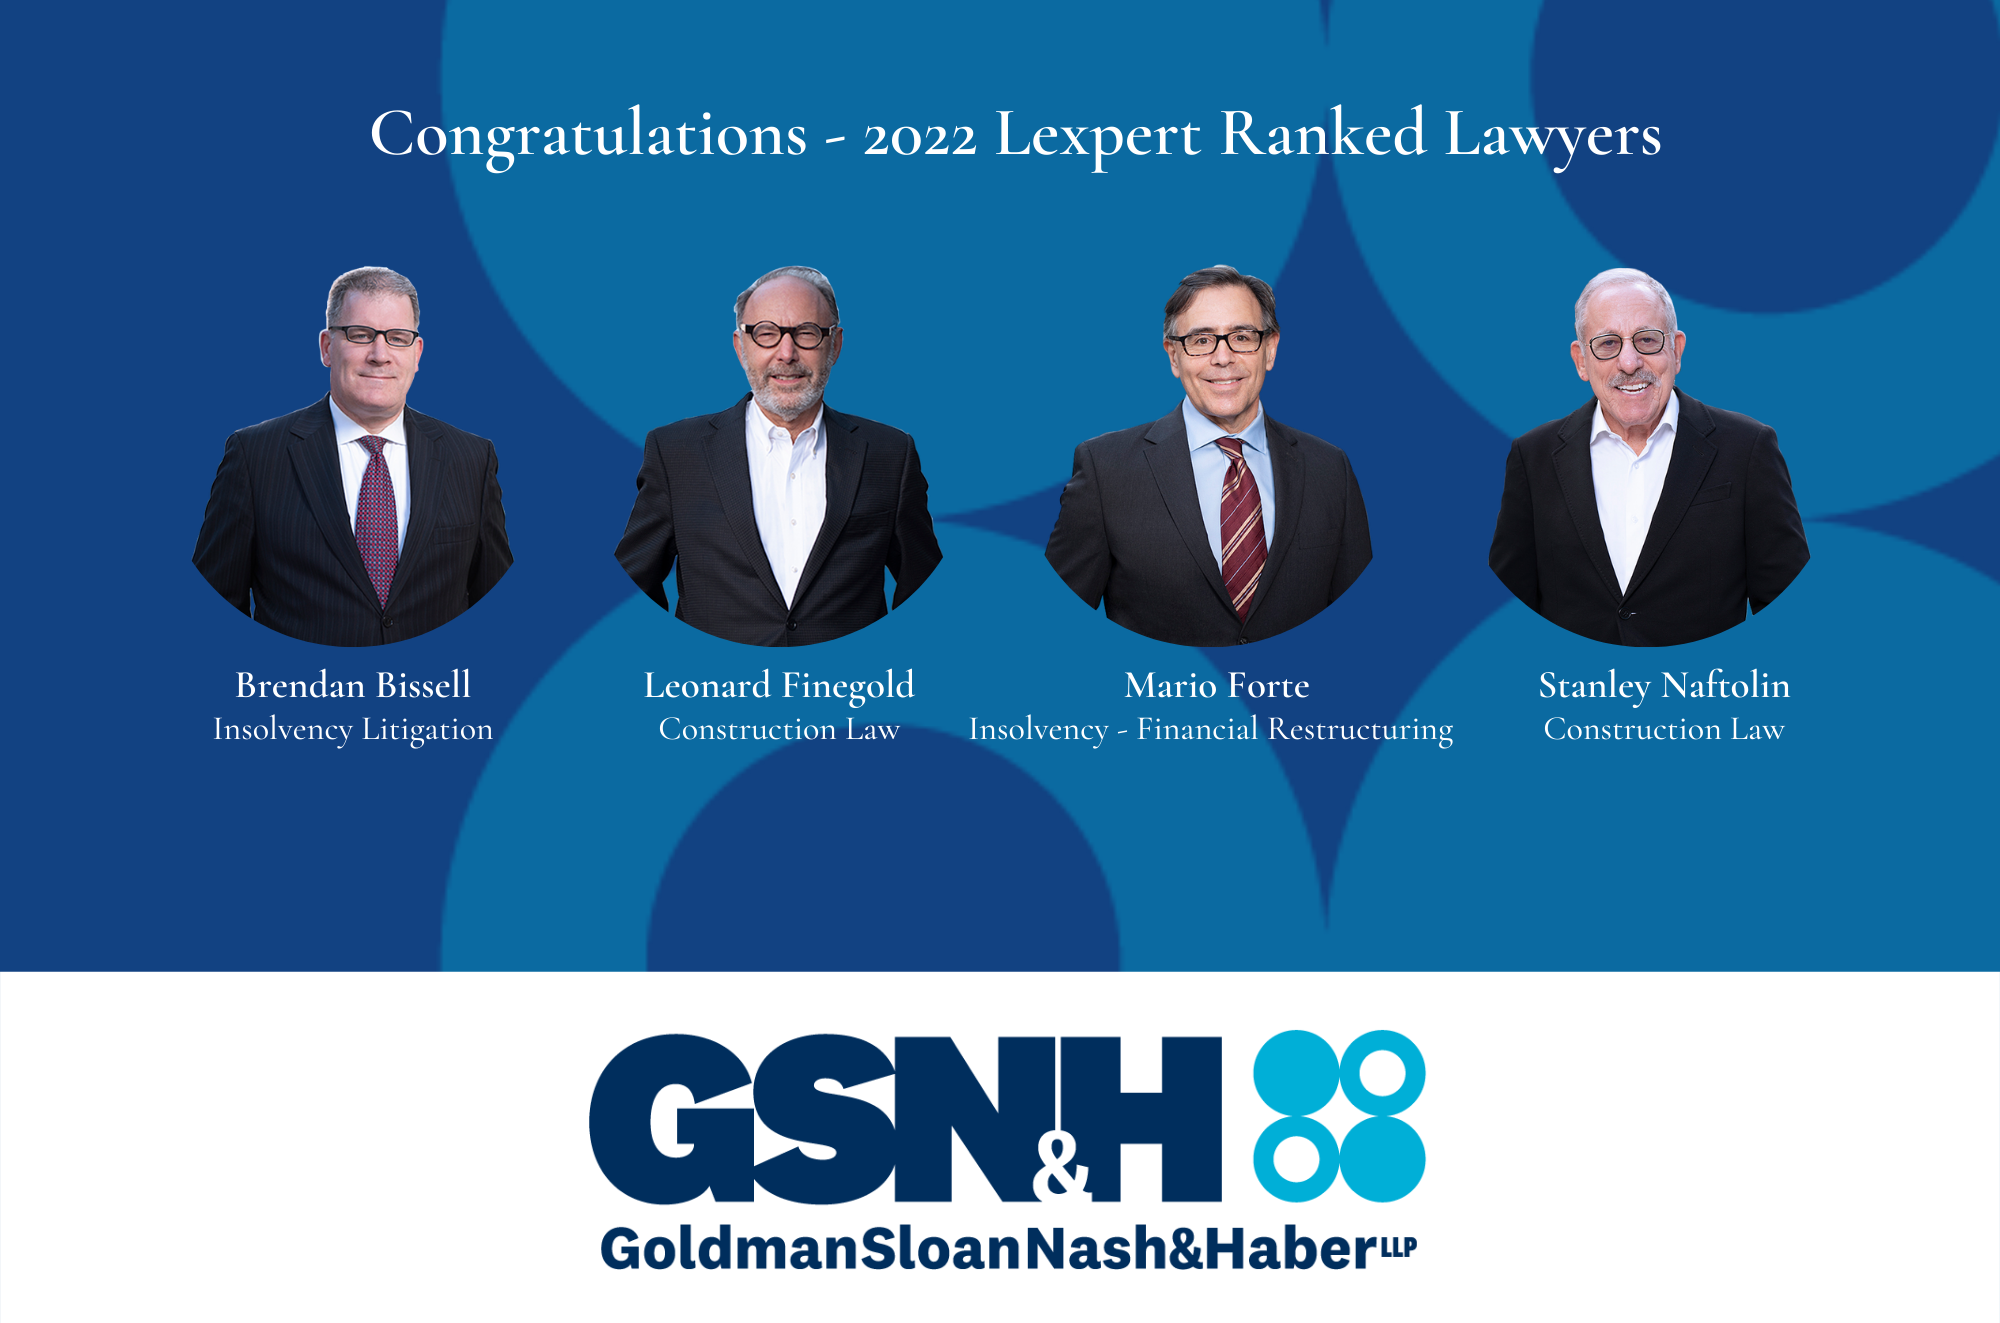 Four Lexpert lawyers in a row as a congratulatory banner